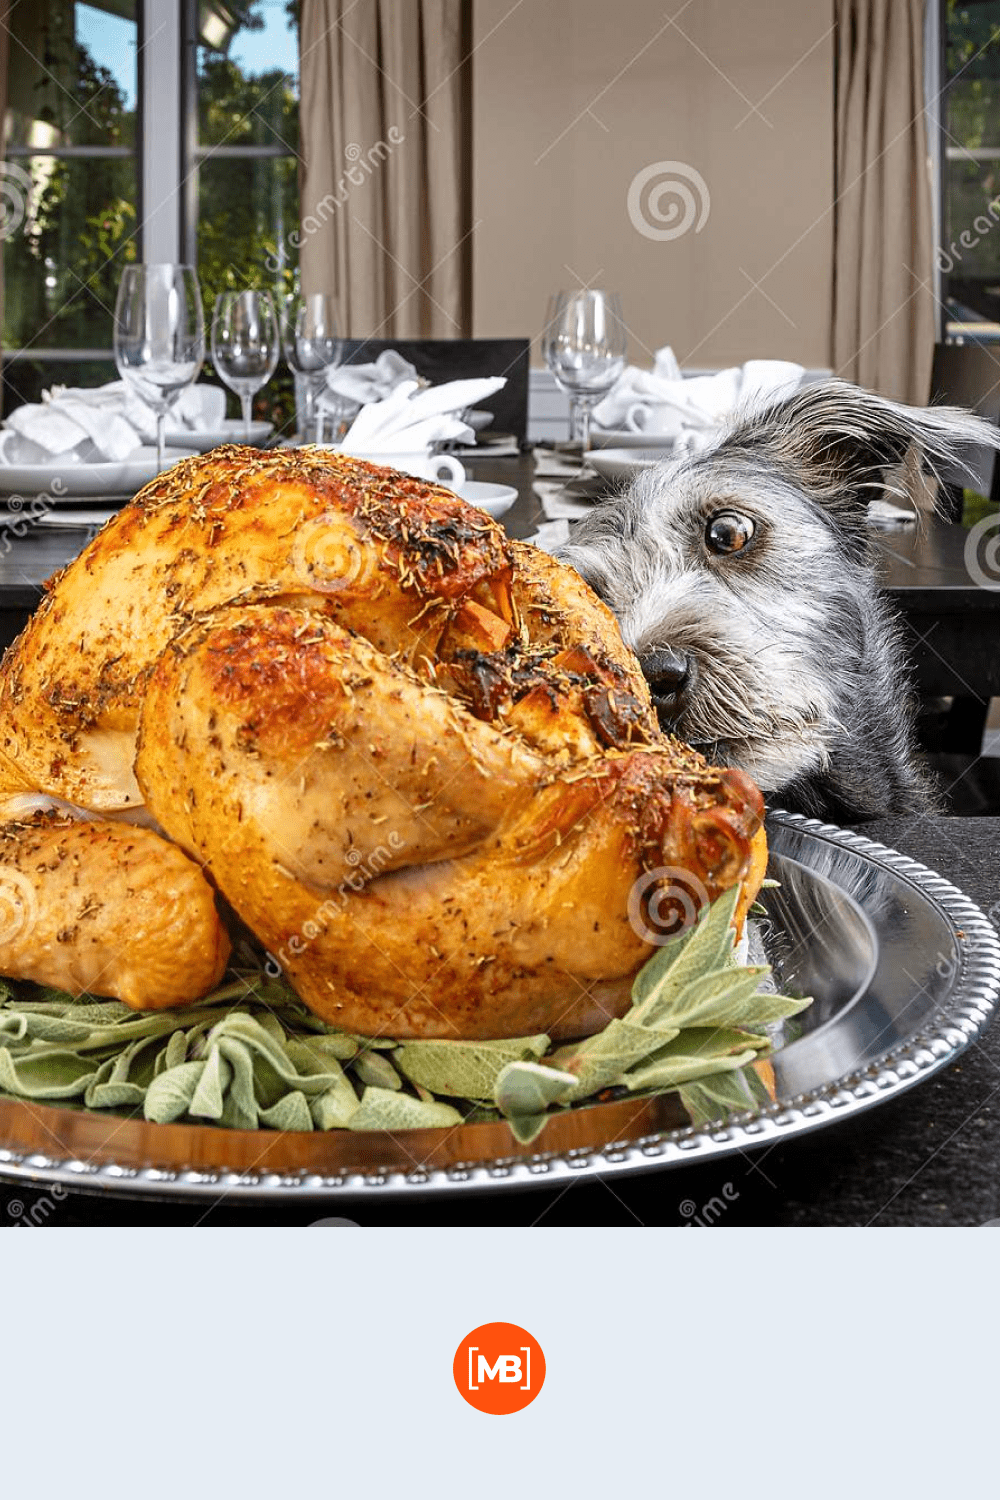 Dog stealing Thanksgiving turkey.